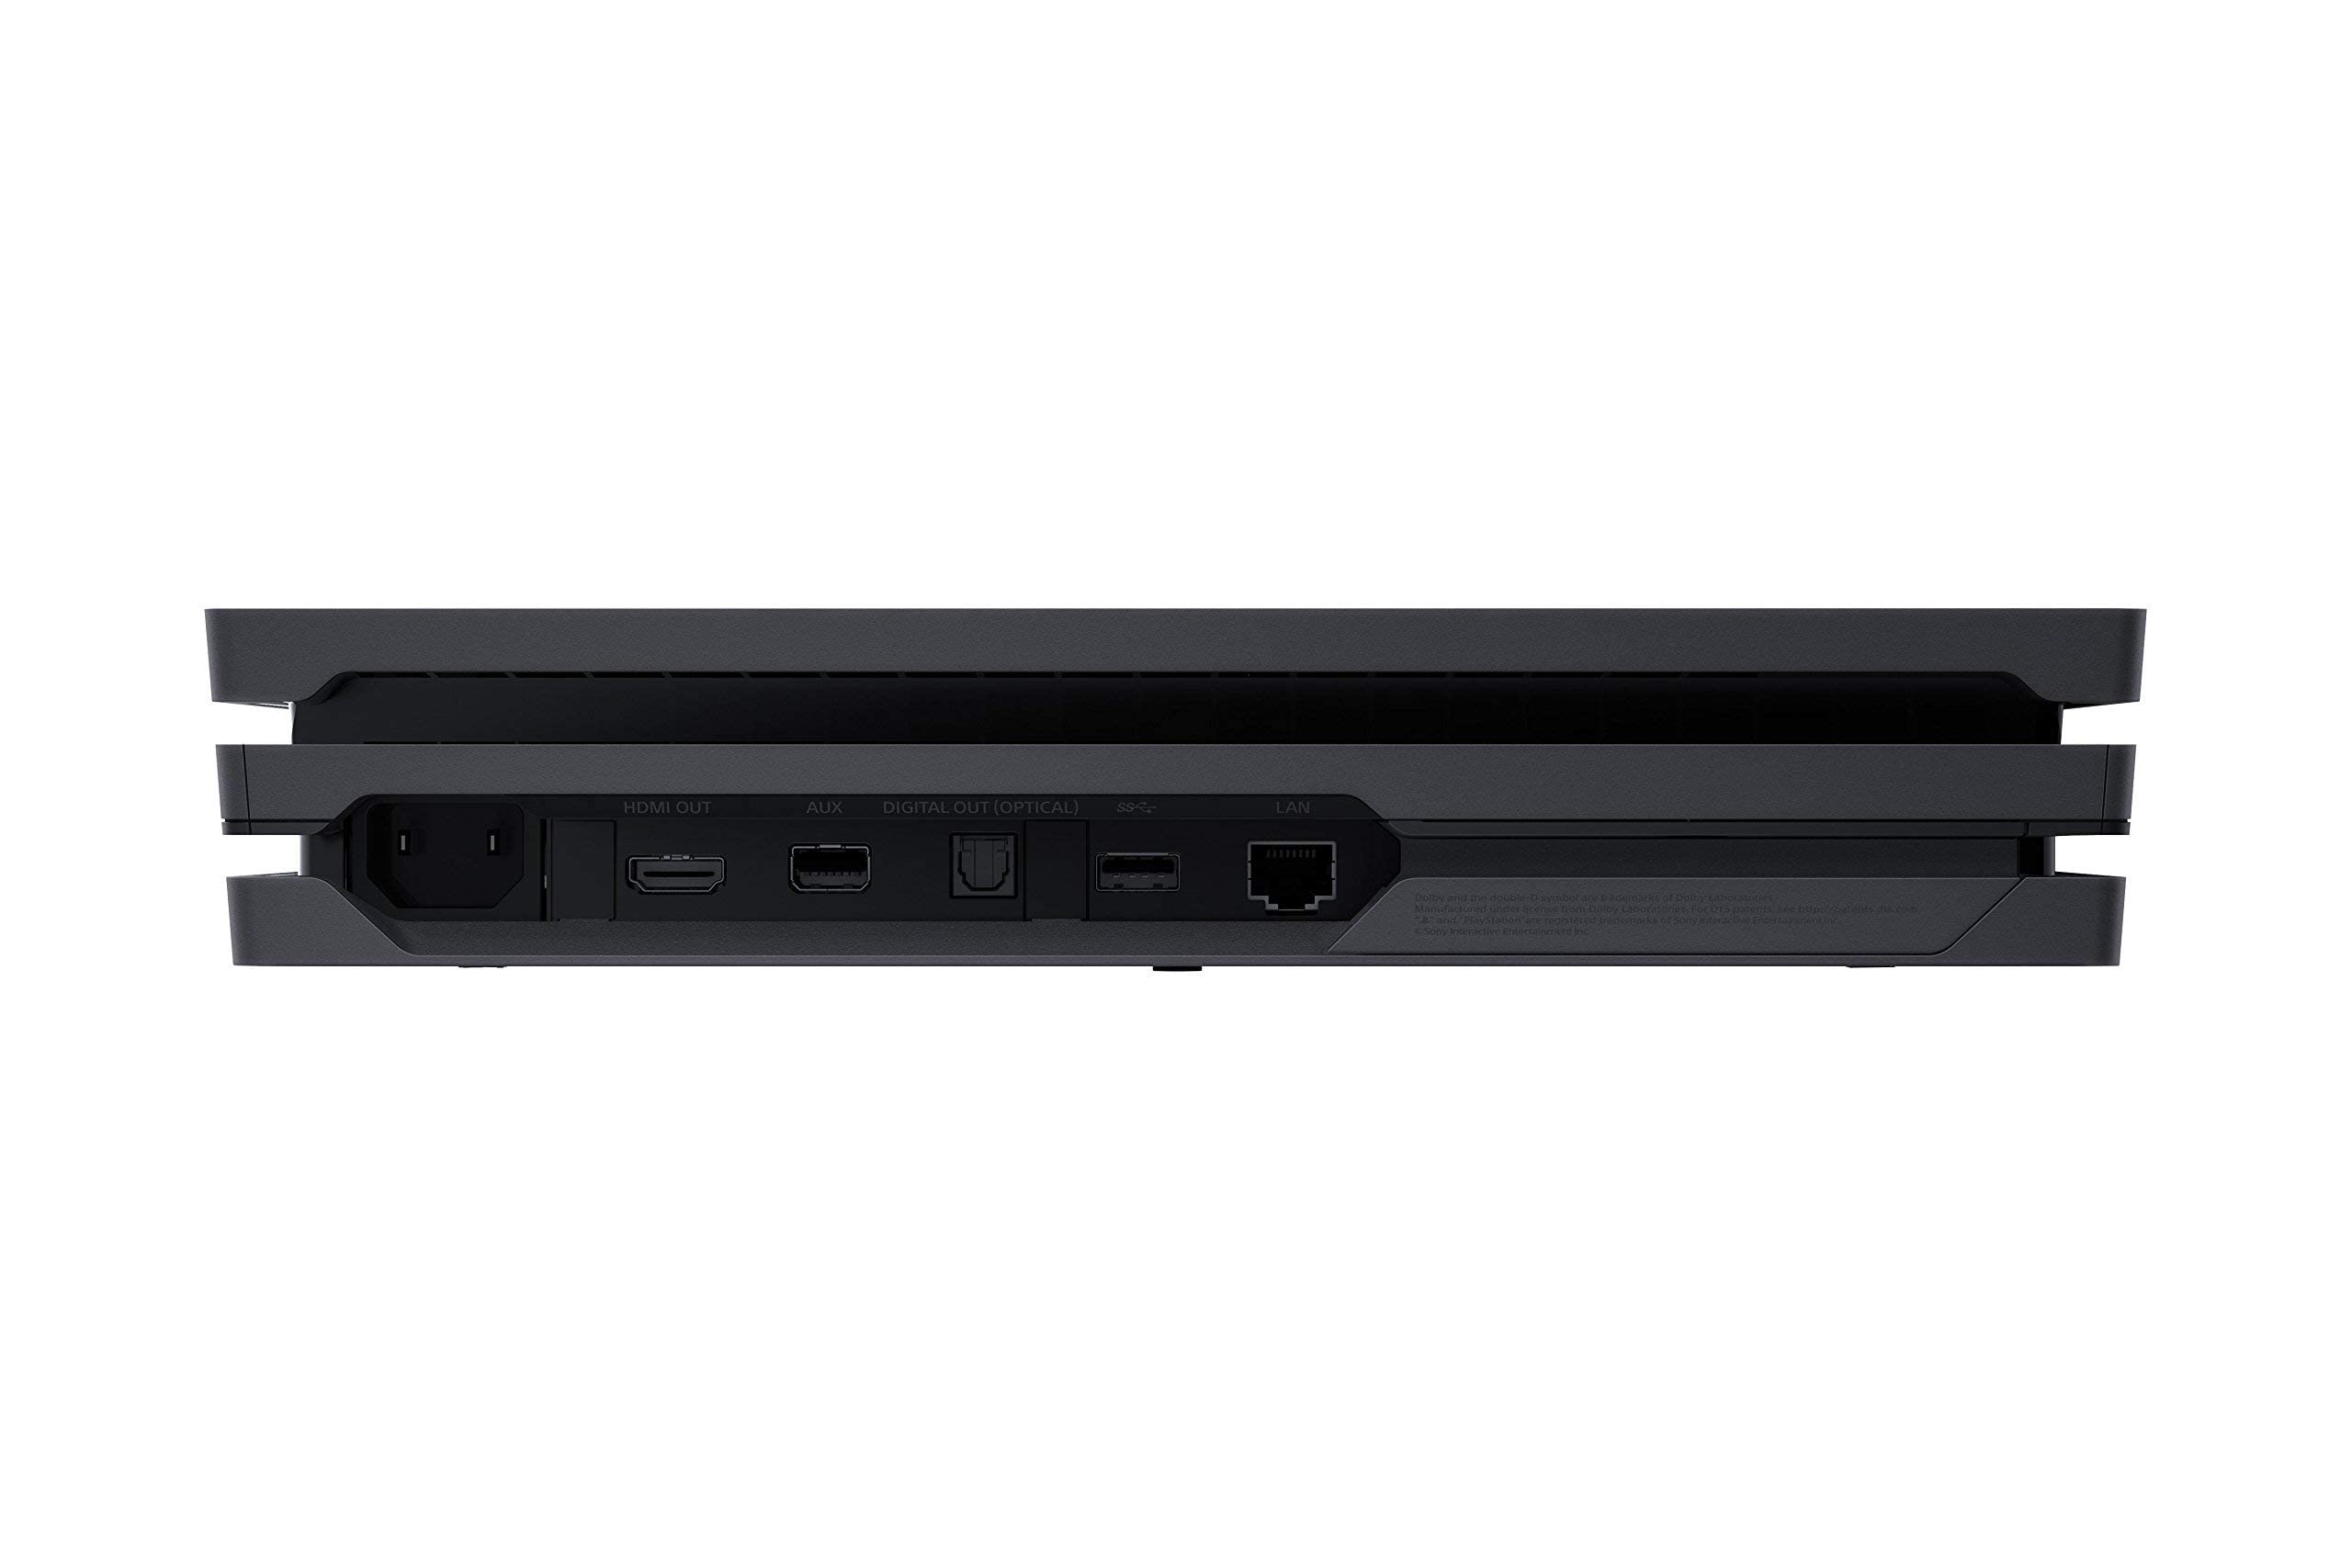 Sony PlayStation 4 Pro w/ Accessories, 1TB HDD, CUH-7215B - Jet Black (Renewed)